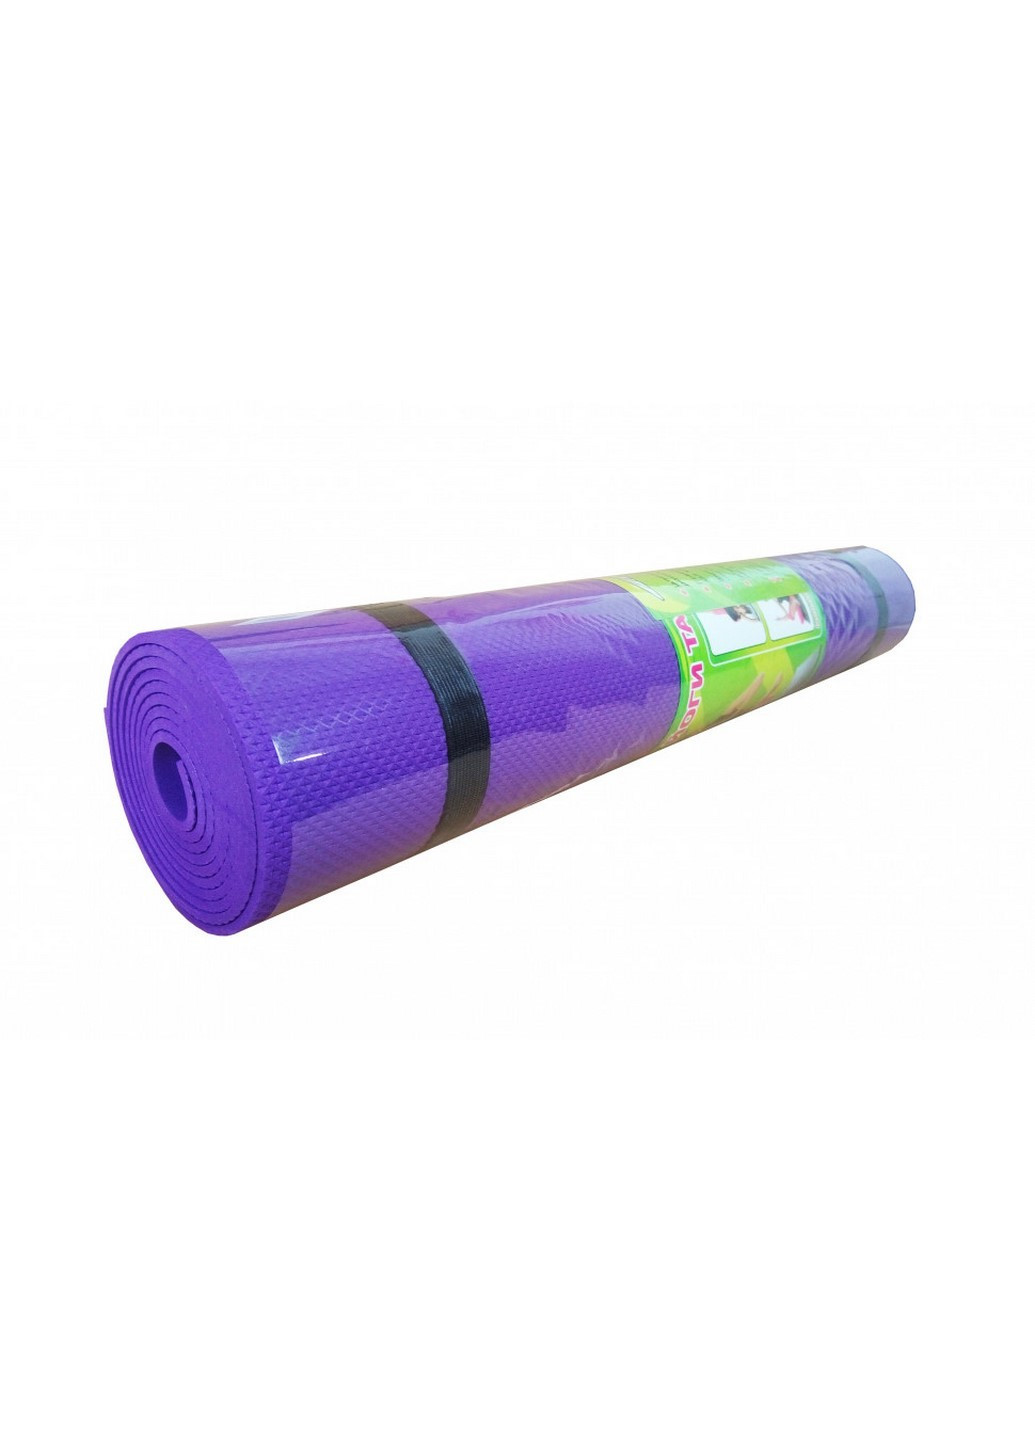 Йогамат M 0380-1 173х61 см, толщина 4 мм (Фиолетовый) Profi (237823459)